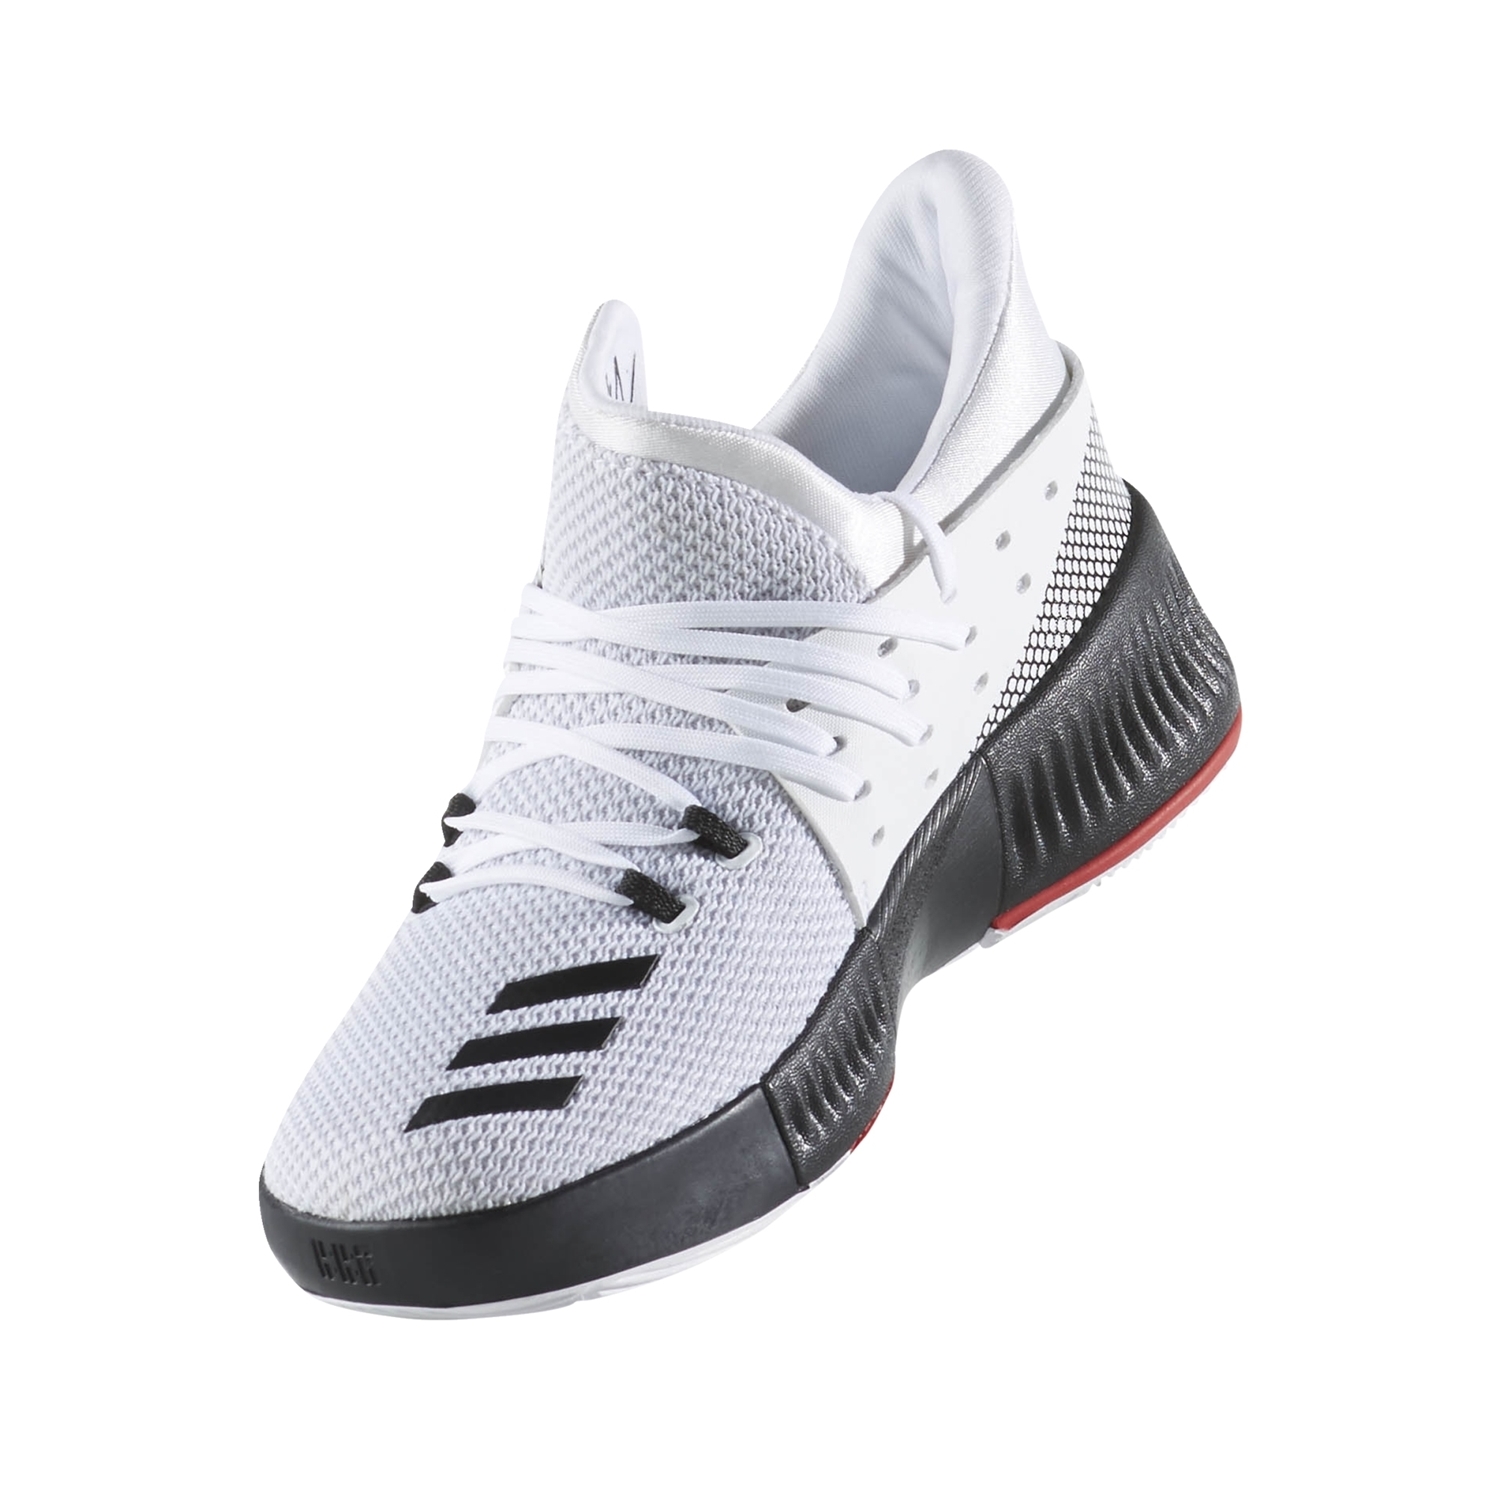 Adidas Damian Lillard 3 C \